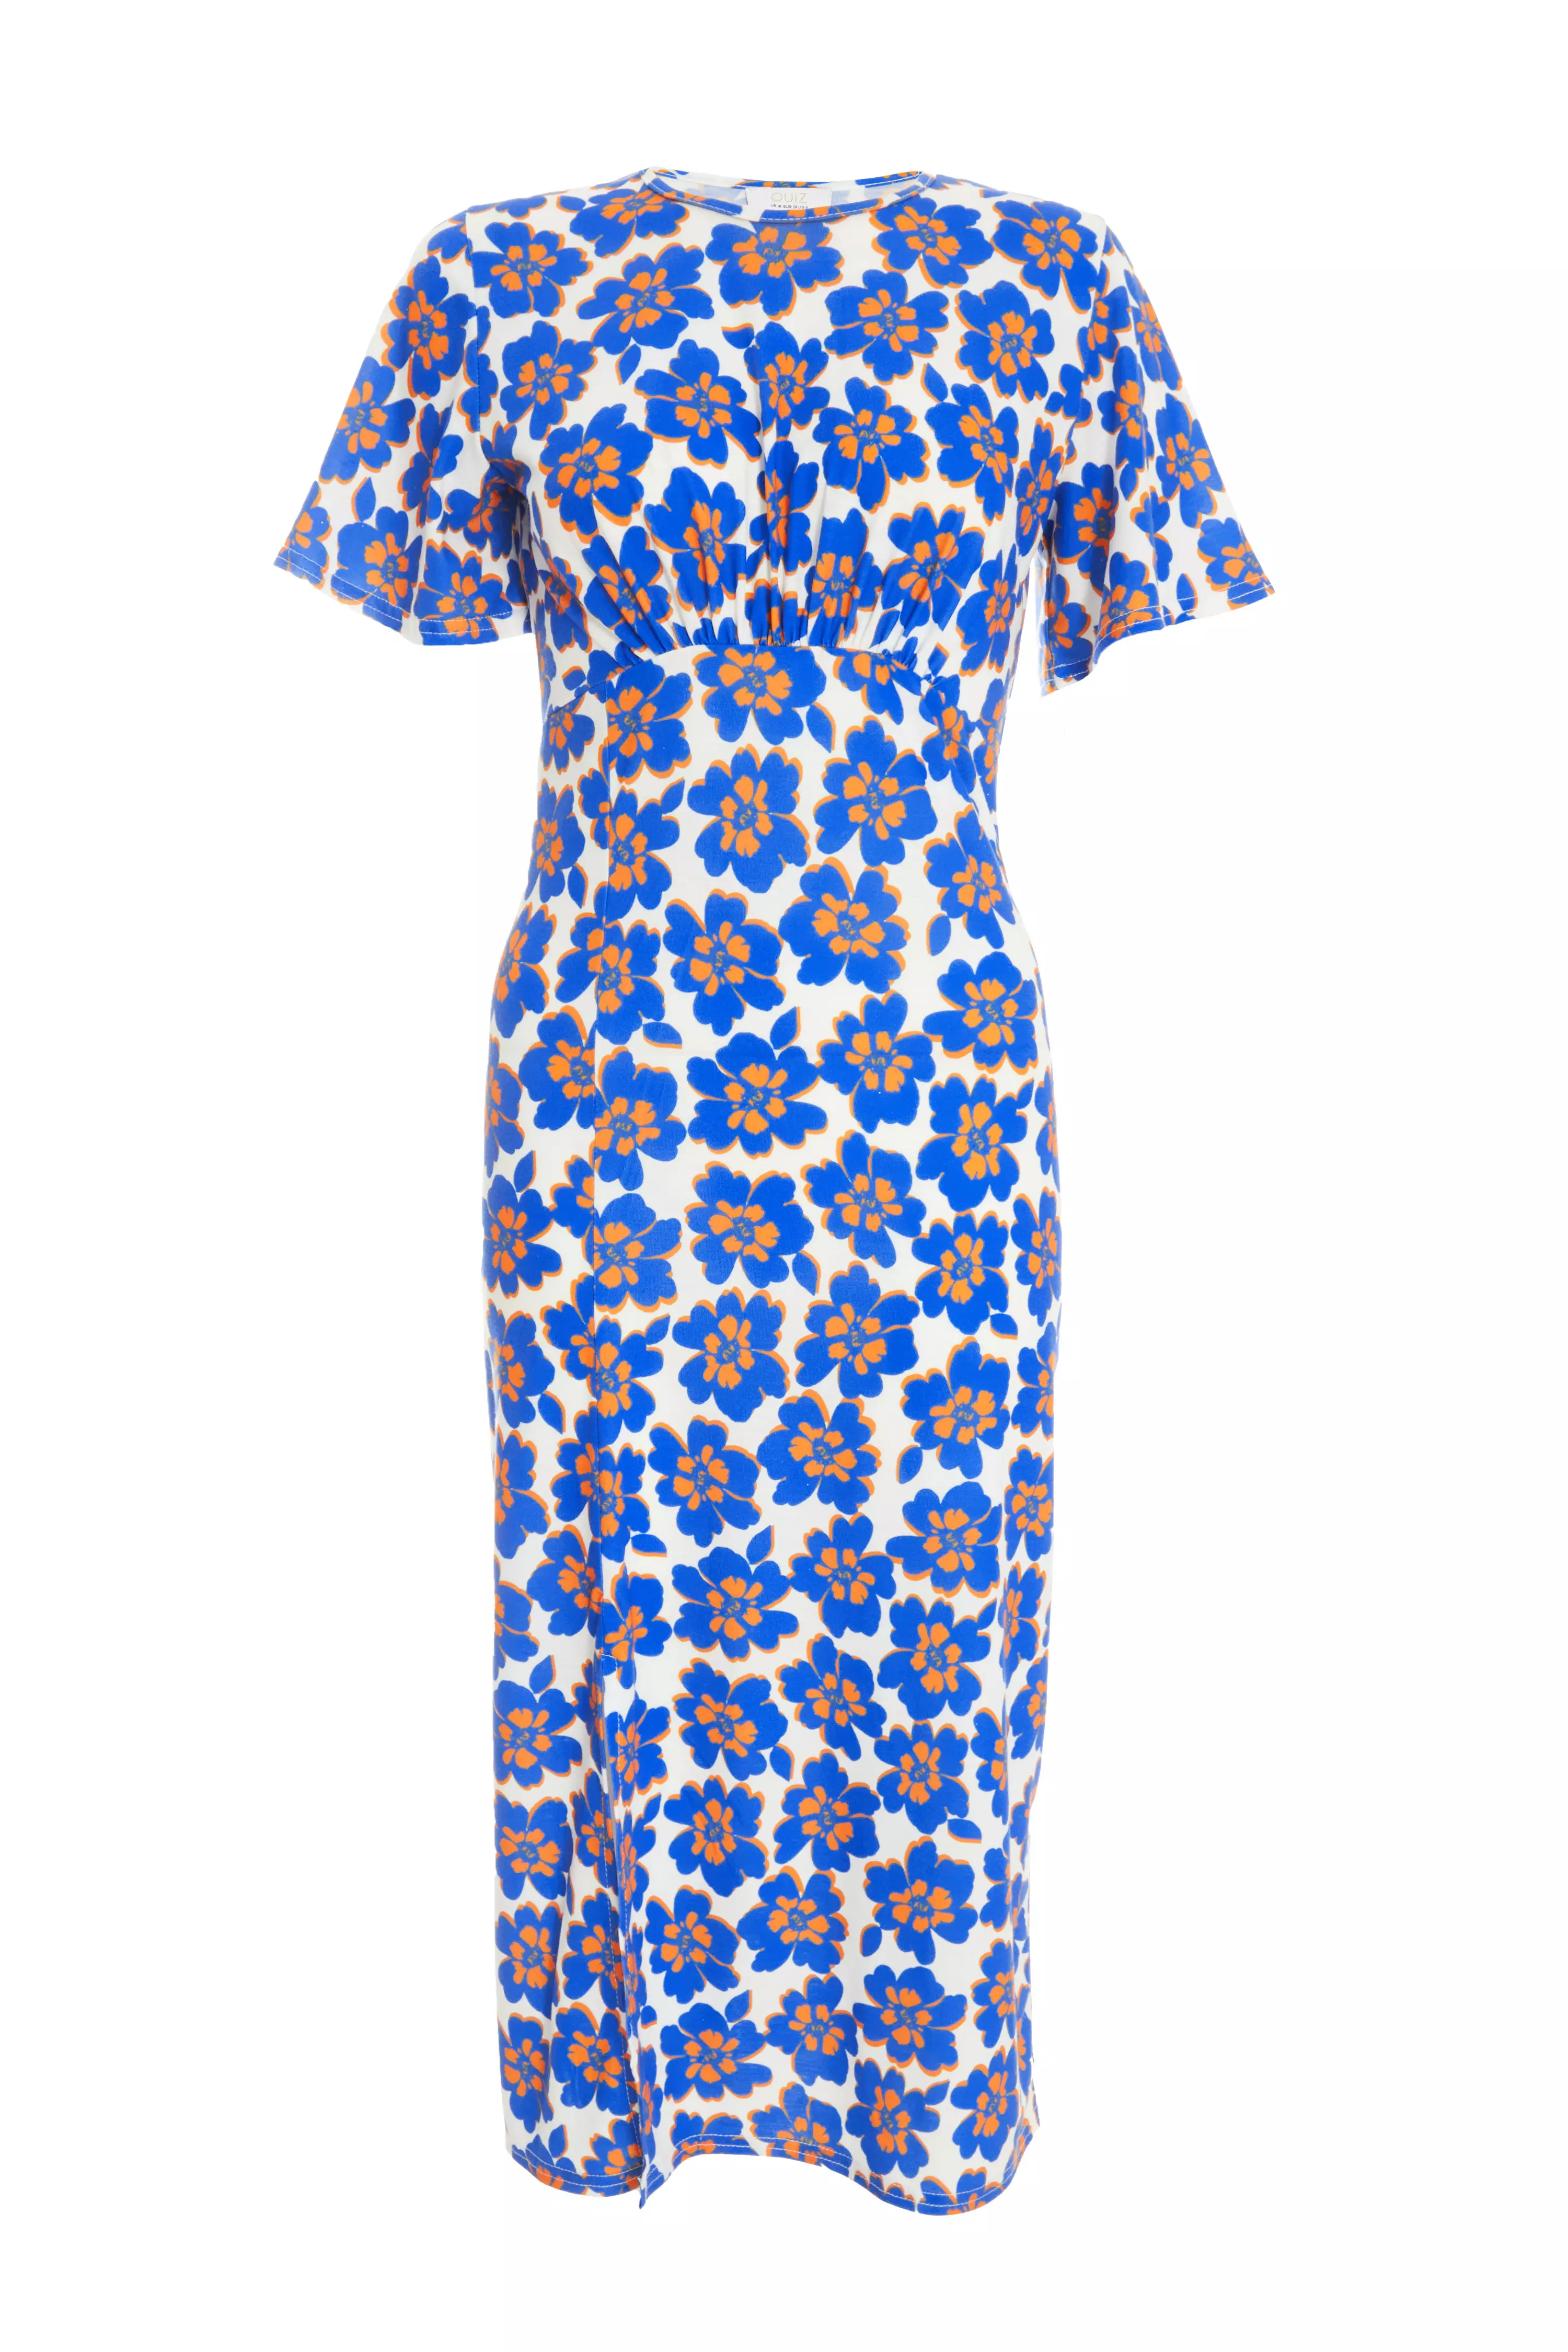 Royal Blue Floral Midi Dress - QUIZ Clothing